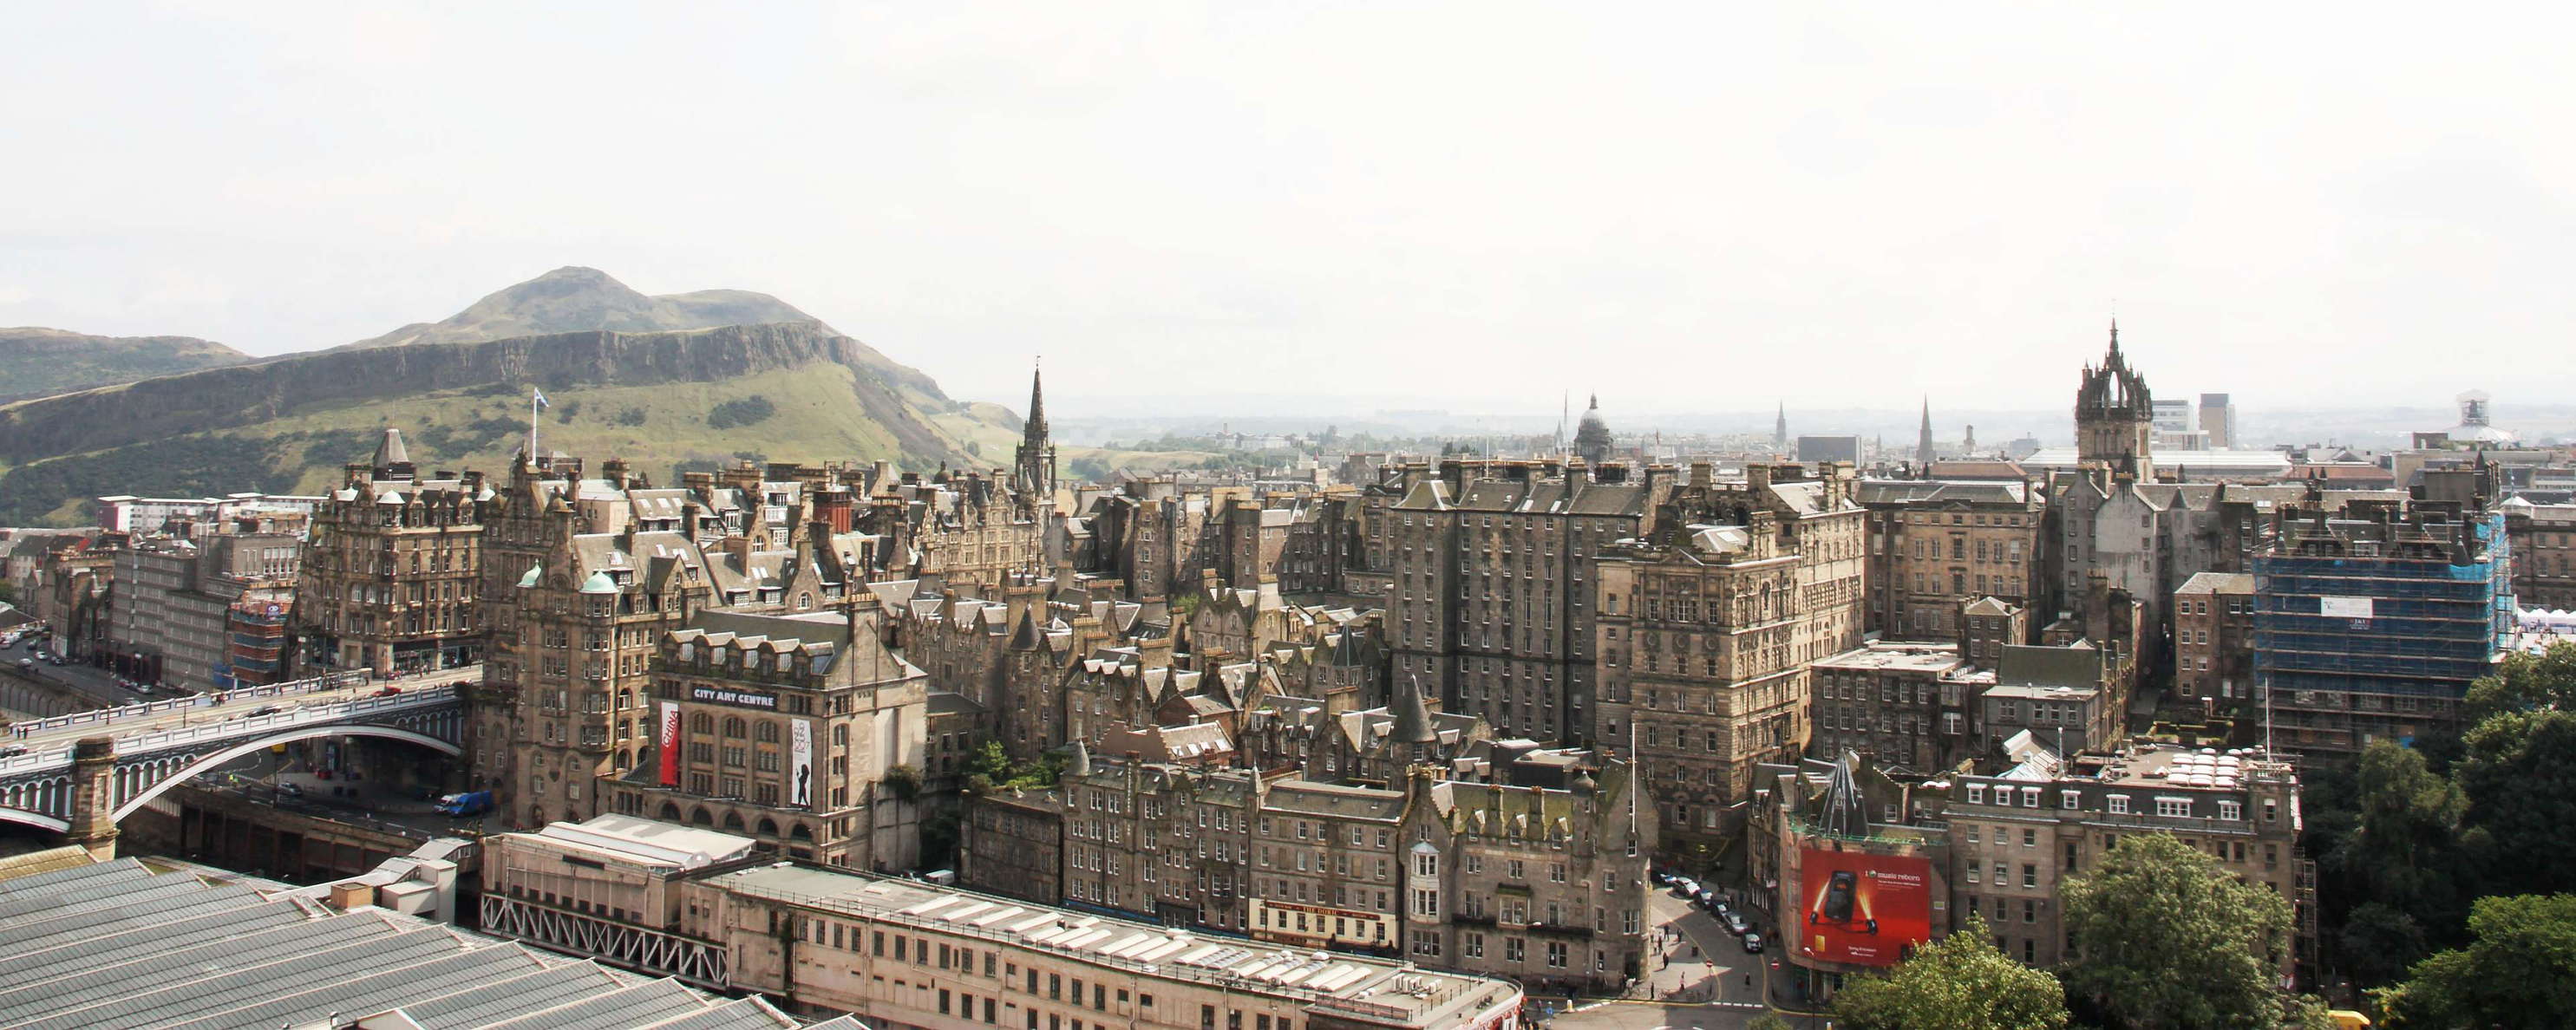 Edinburgh  |  City centre and Arthur's Seat